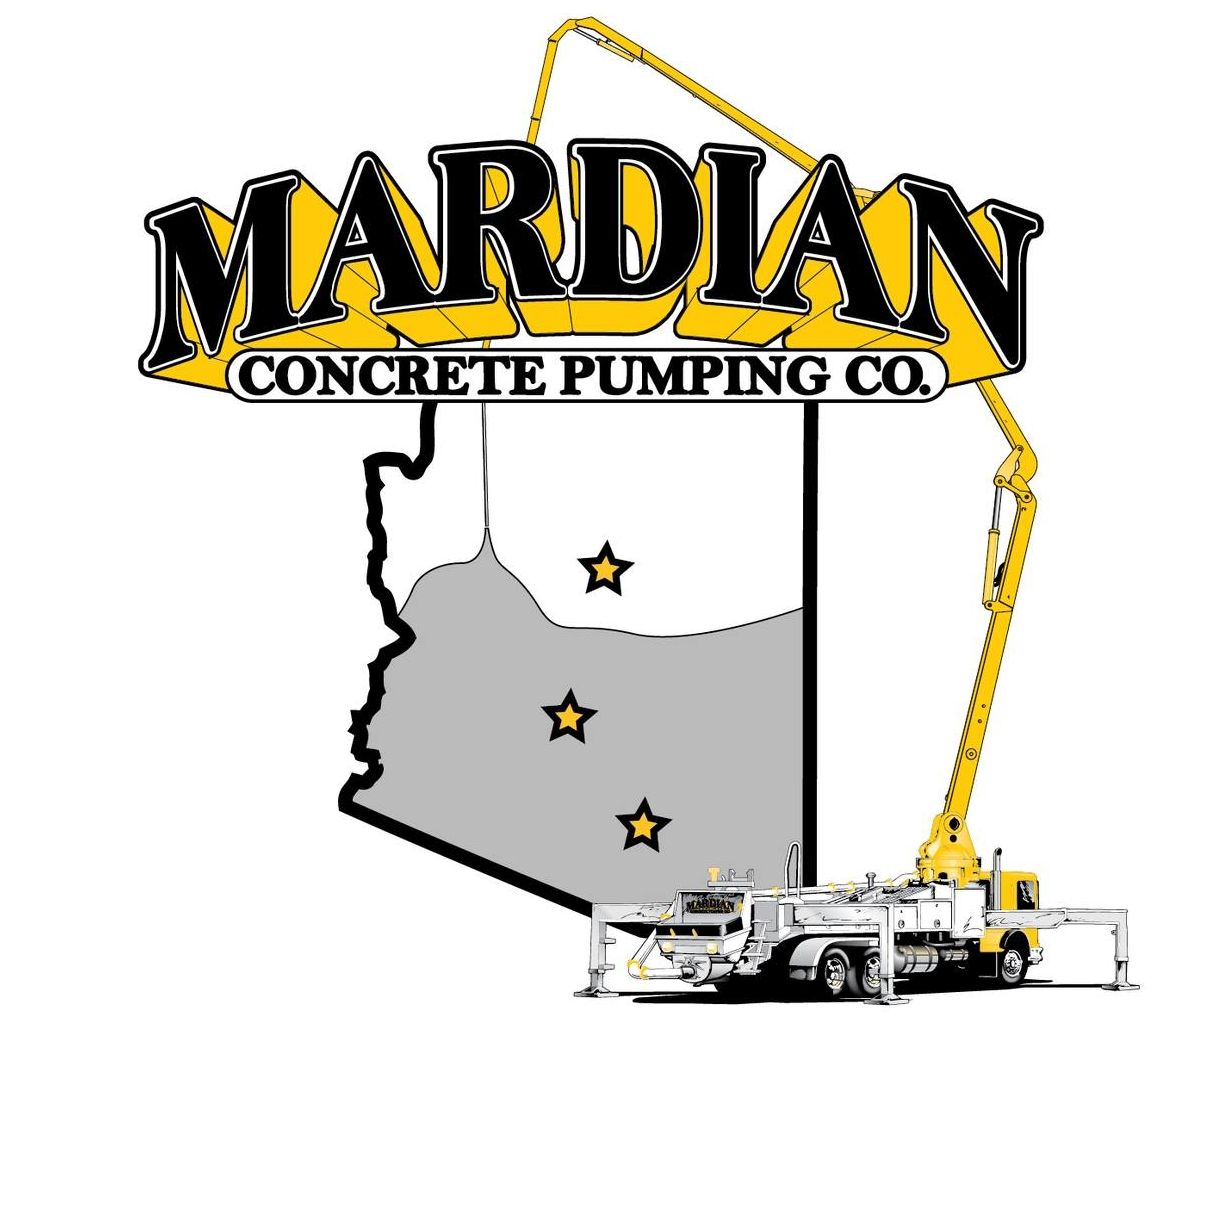 Mardian Concrete Pumping Co.